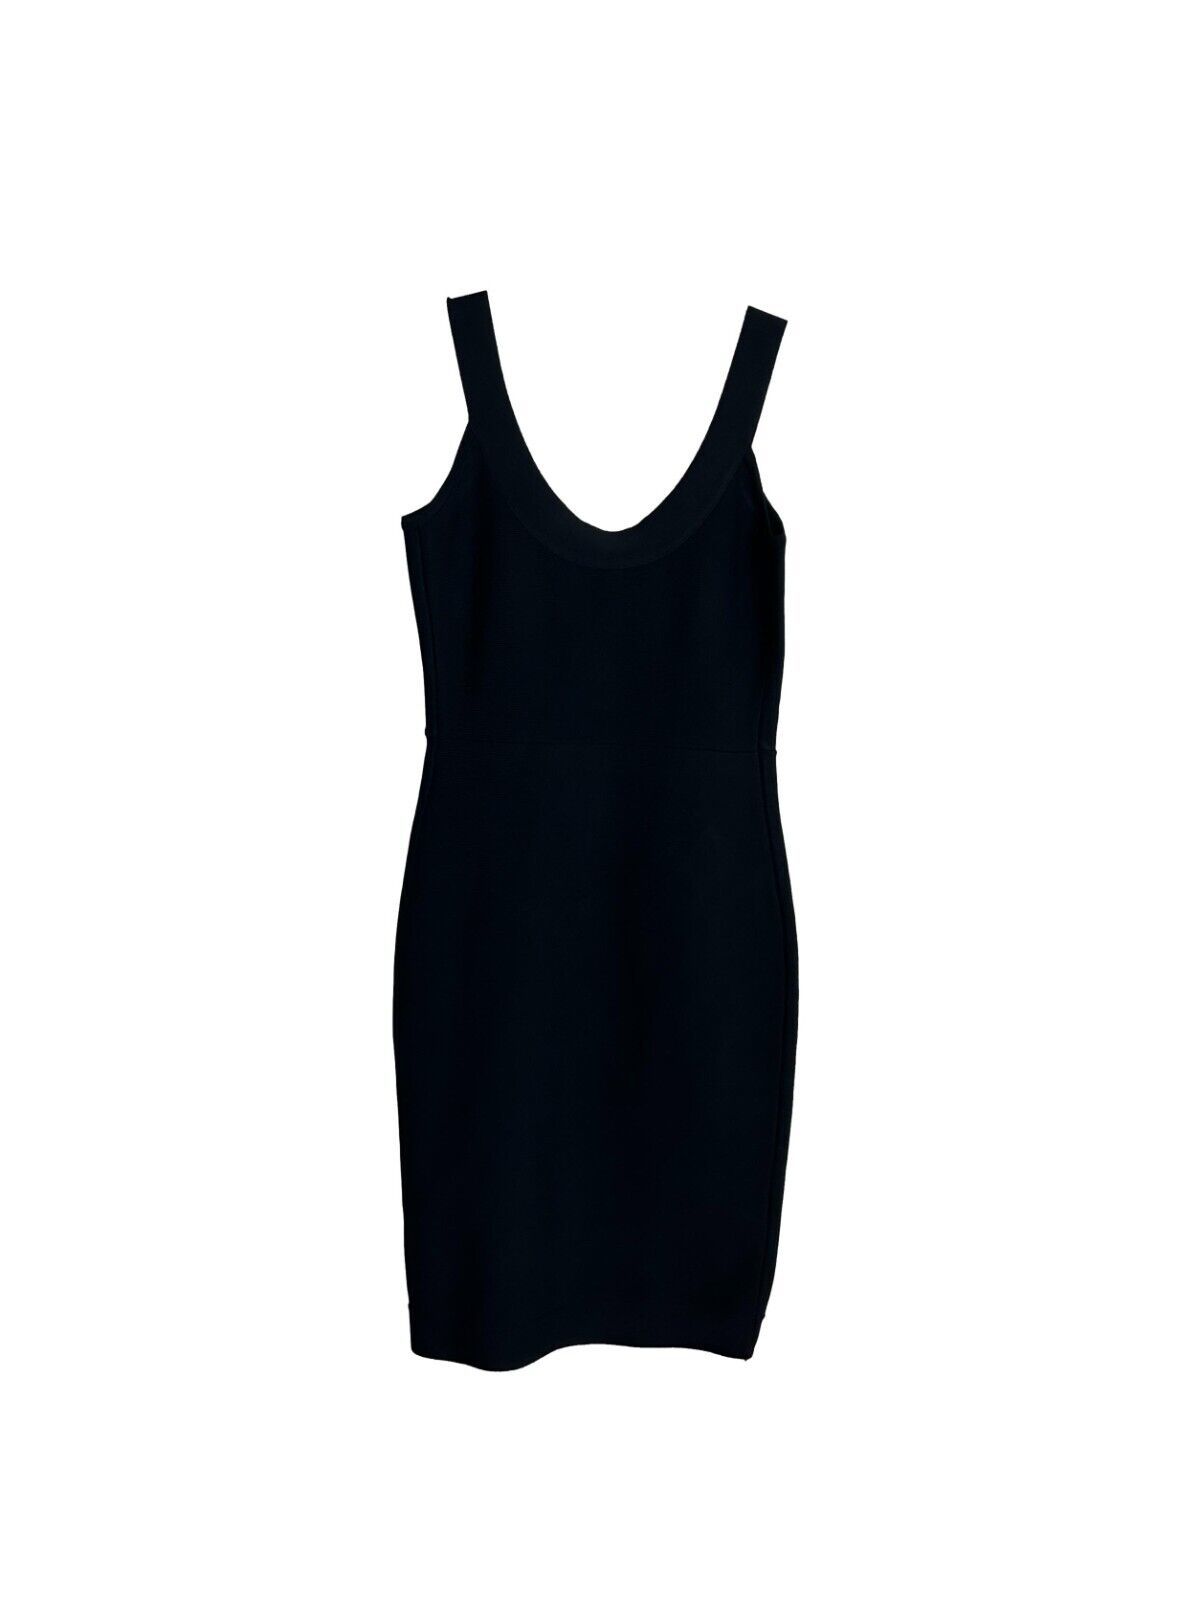 Primary image for BCBG Maxazria Womens Size XS Dress Black Bodycon Exposed Zipper Sleeveless Knit